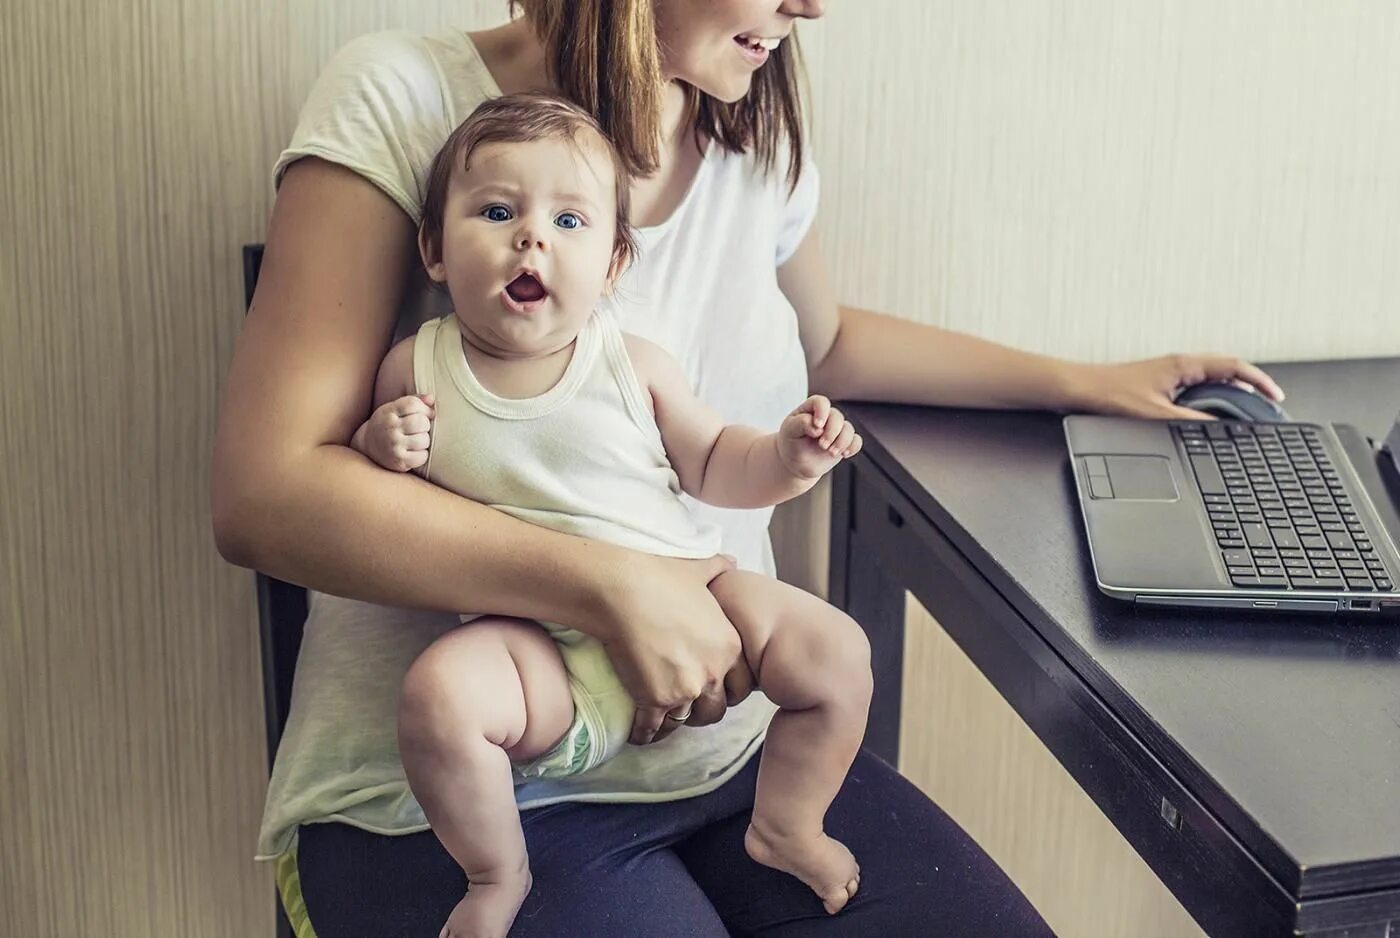 Мама в декрете. Мама с ребенком за компьютером. Женщина с ребенком за компьютером. Мамочка с ребенком у компьютера.